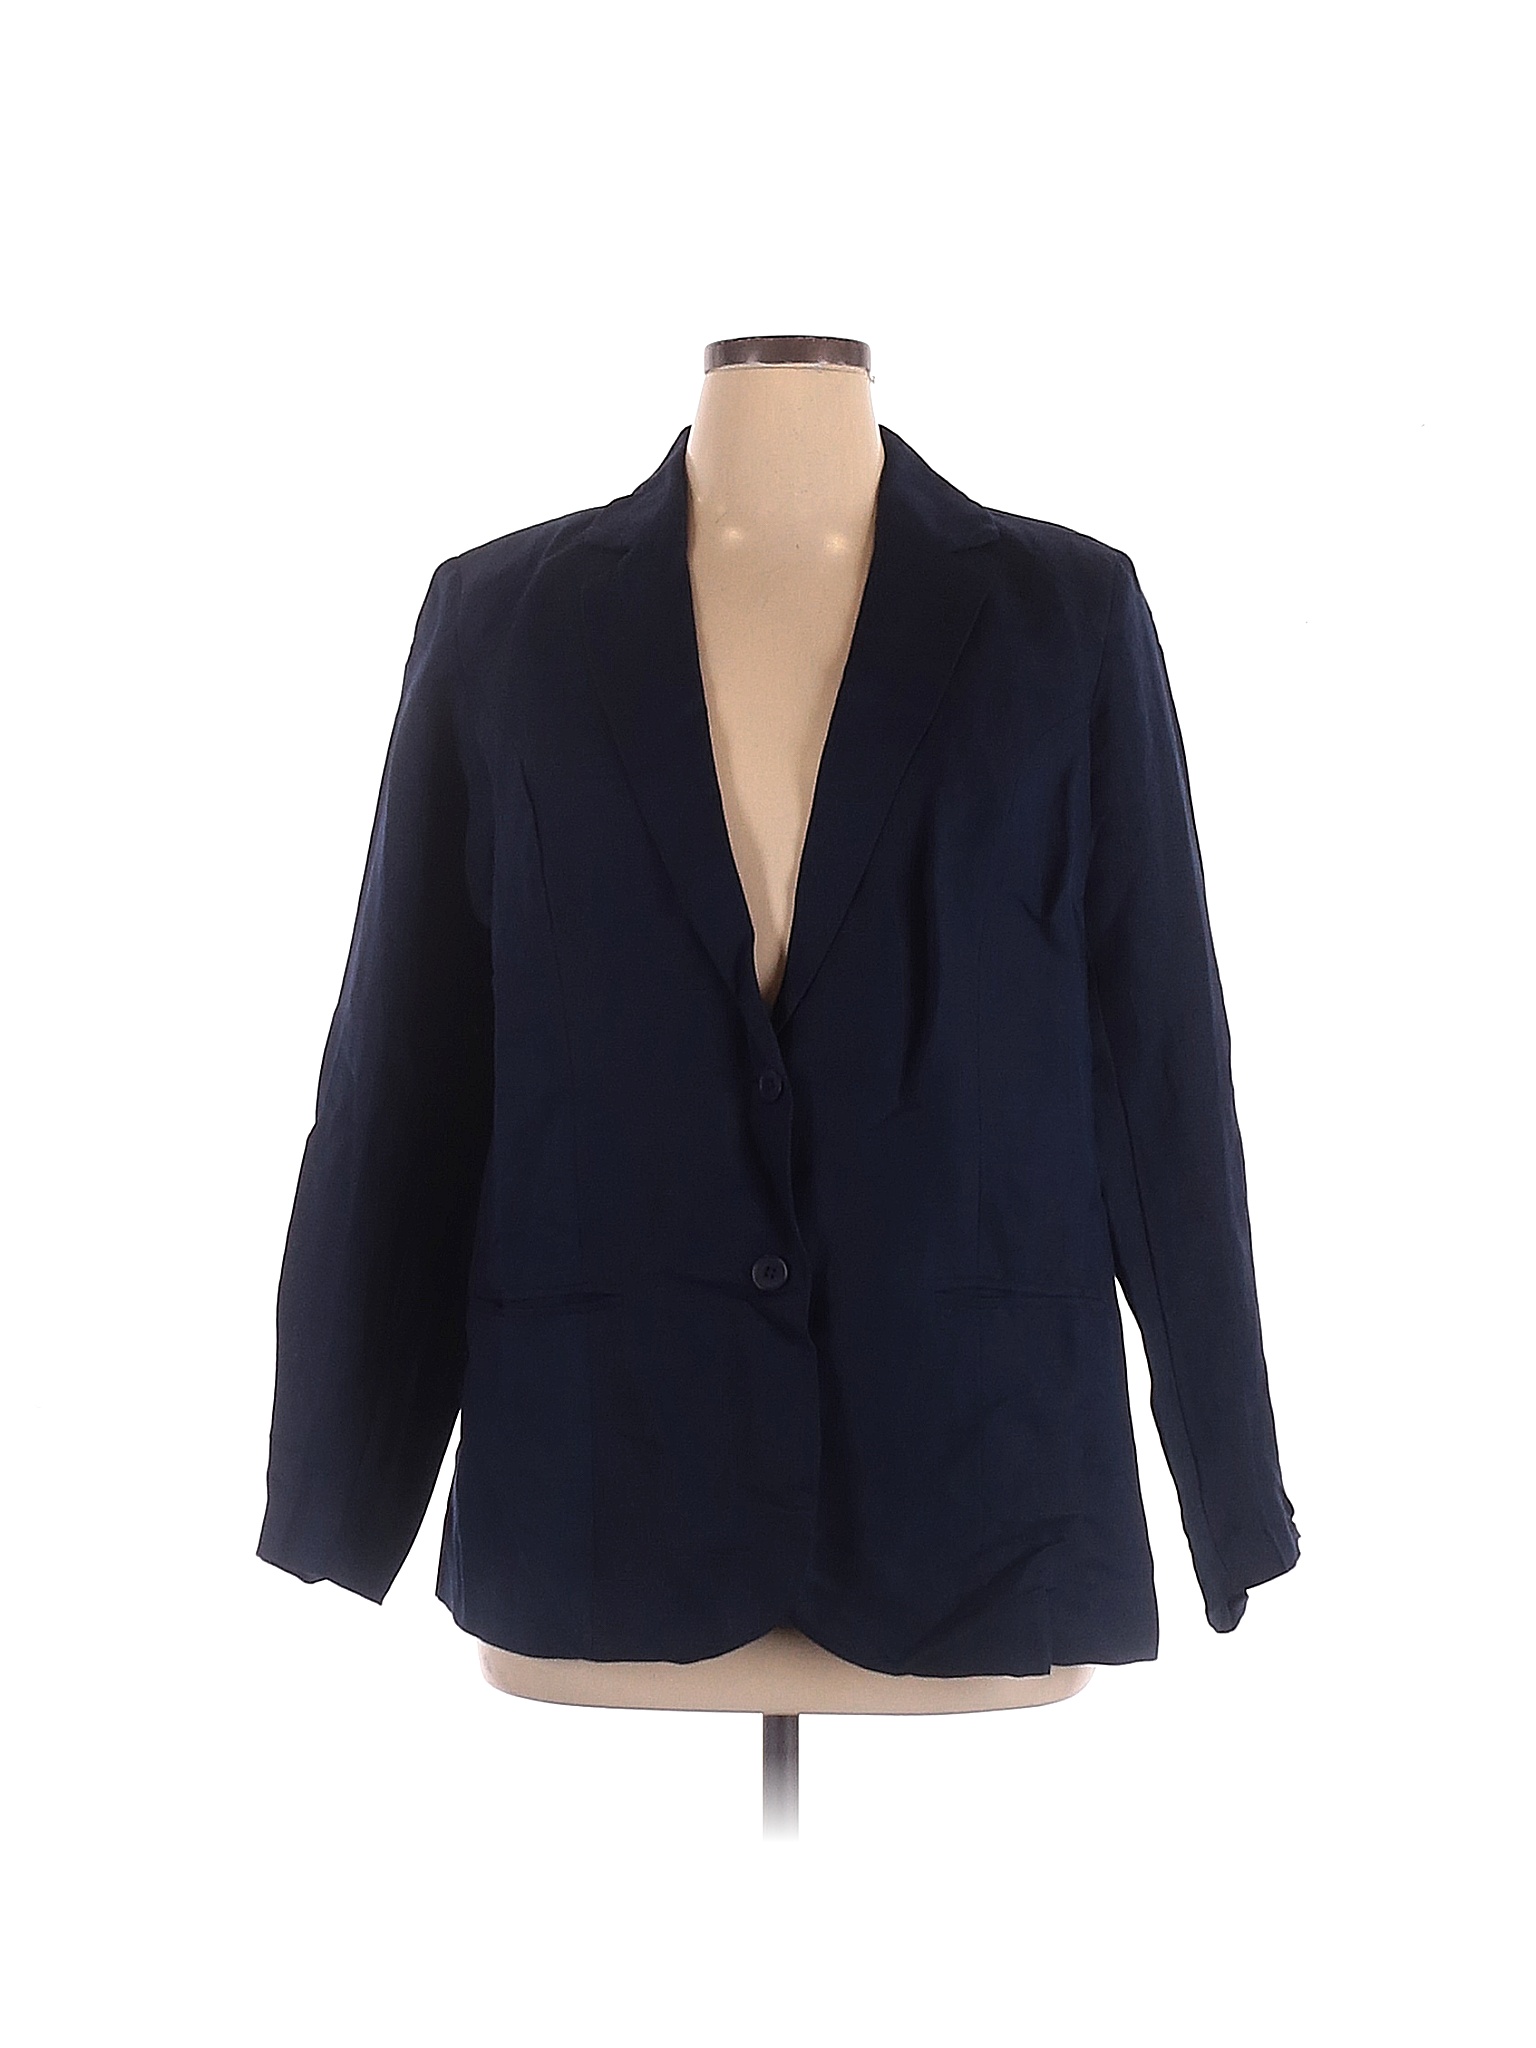 Jessica London Solid Blue Blazer Size 16 - 74% off | thredUP